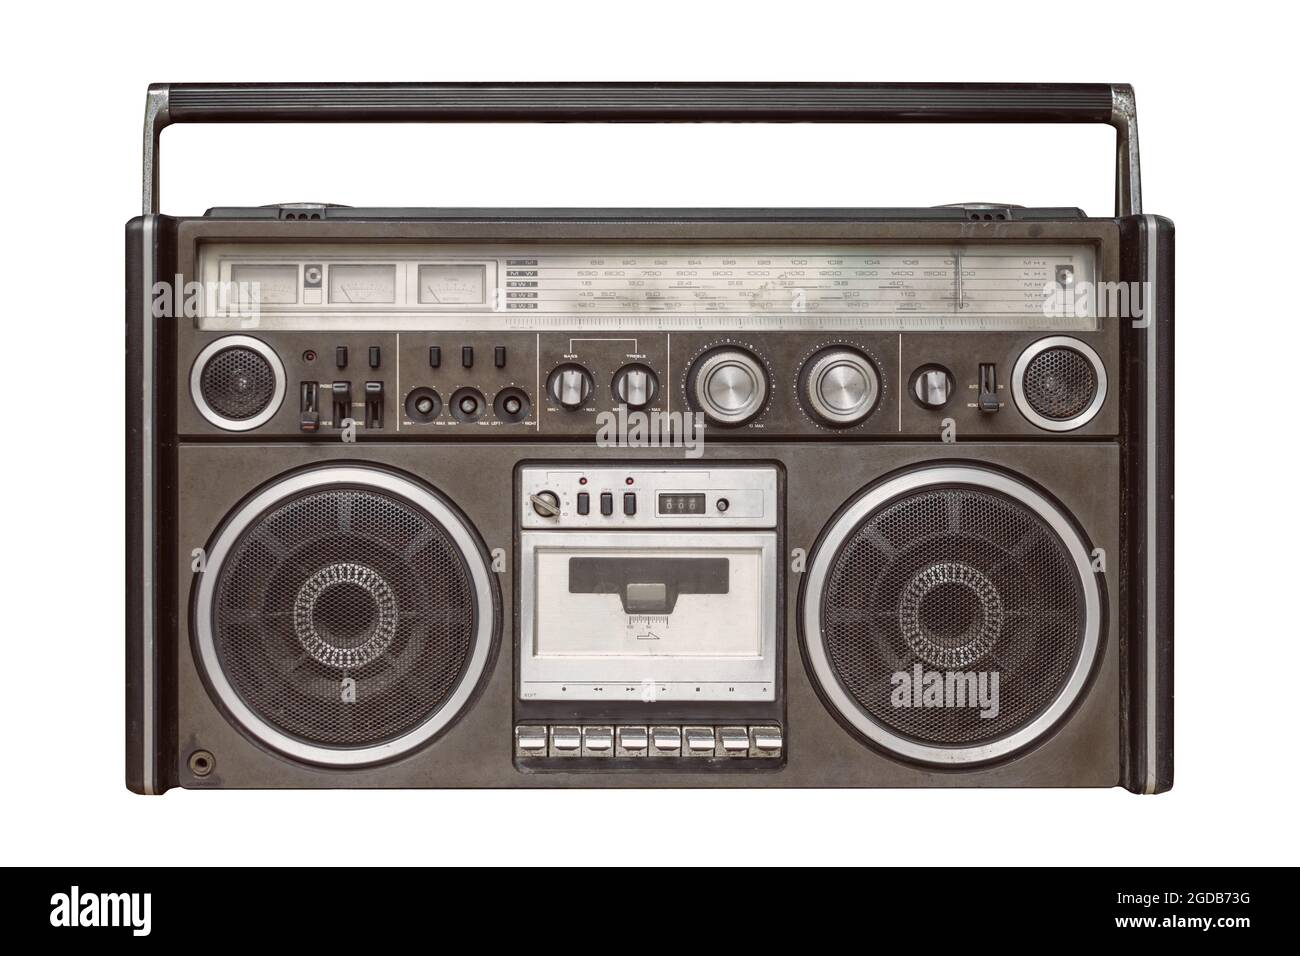 Portable AM/FM Radio Cassette Recorder,Vintage Radio Cassette  Recorder,AM/FM Radio Cassette Recorder,80's Classic Style,Modern